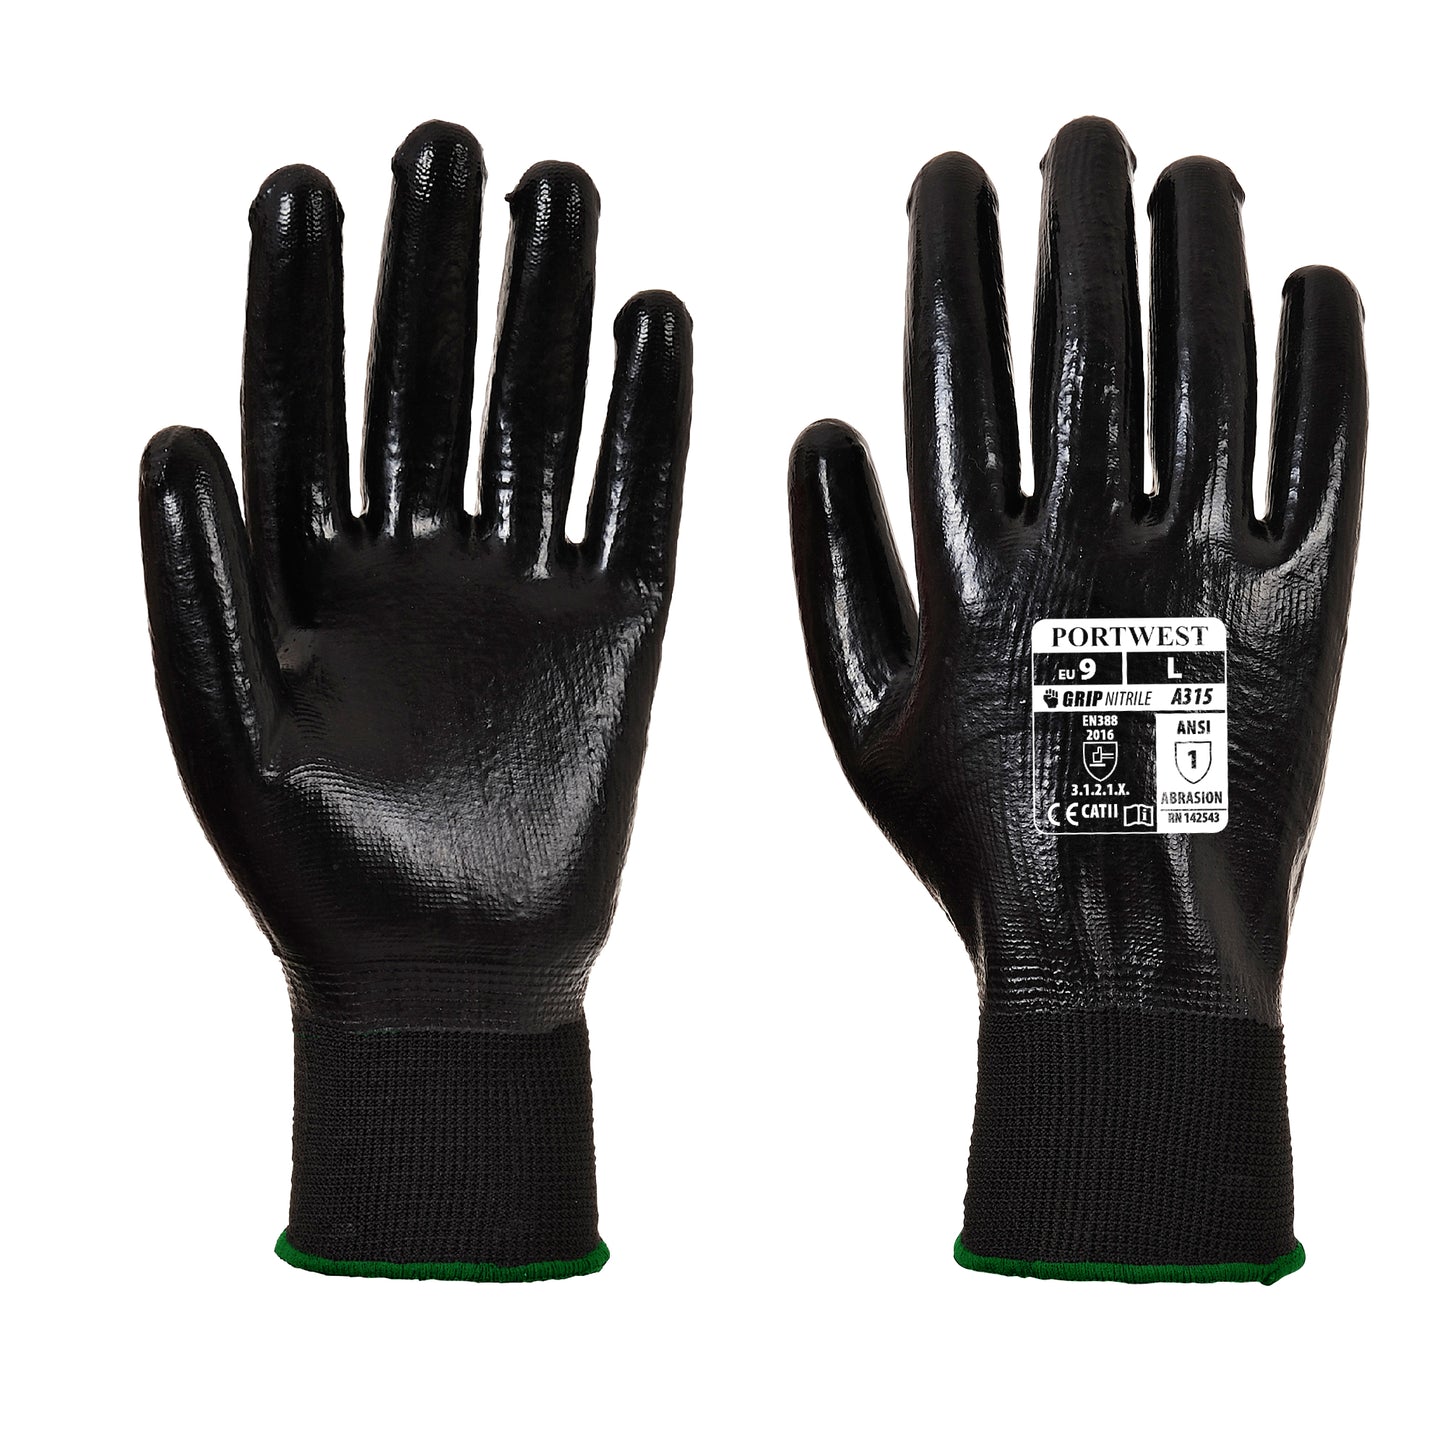 All-Flex Grip Glove Black - A315 Palm & Back 